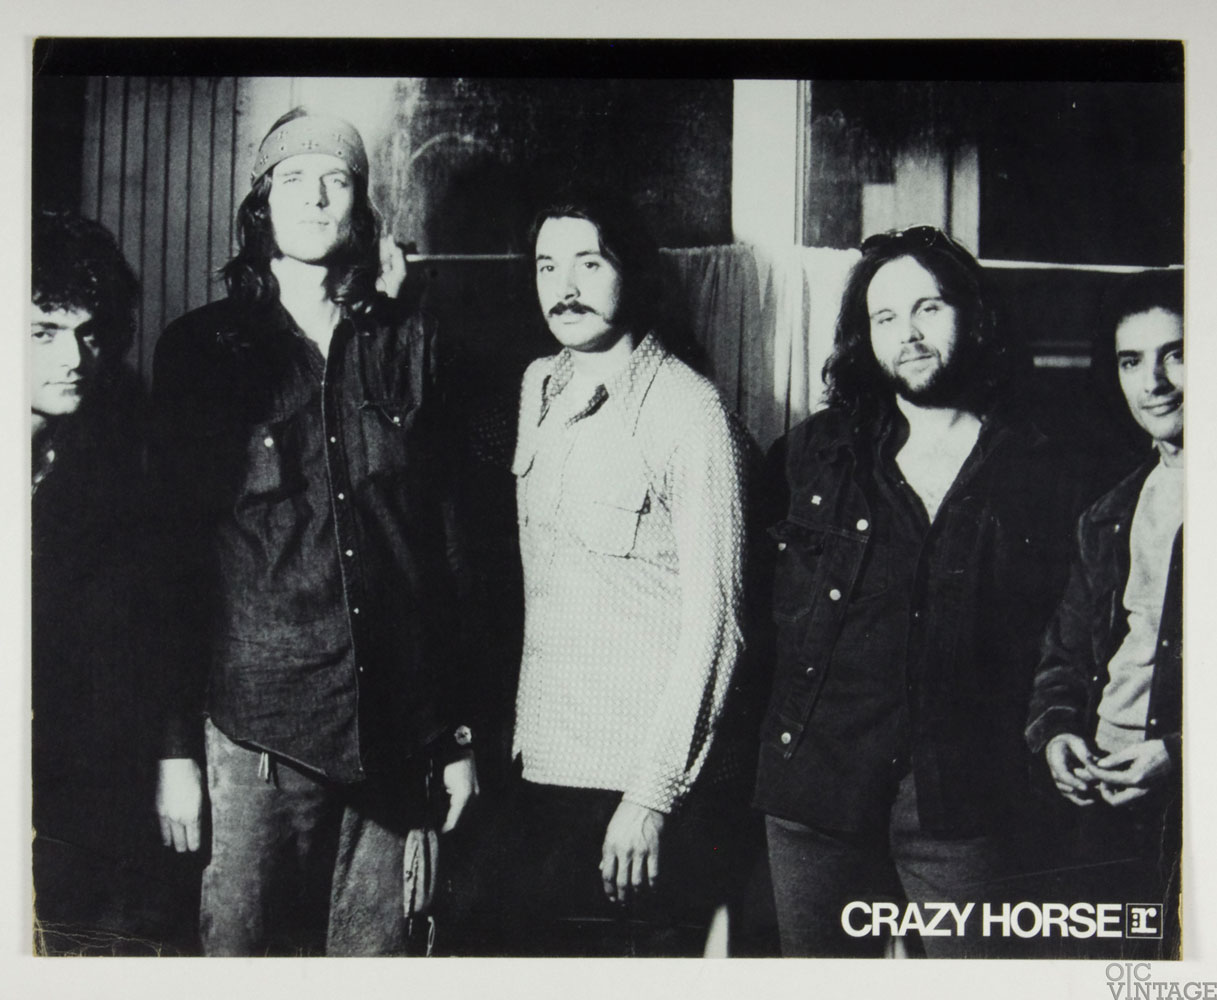 Crazy Horse Poster Cardboard 1972 Crazy Horse Album Promo  B/W  22 x 27